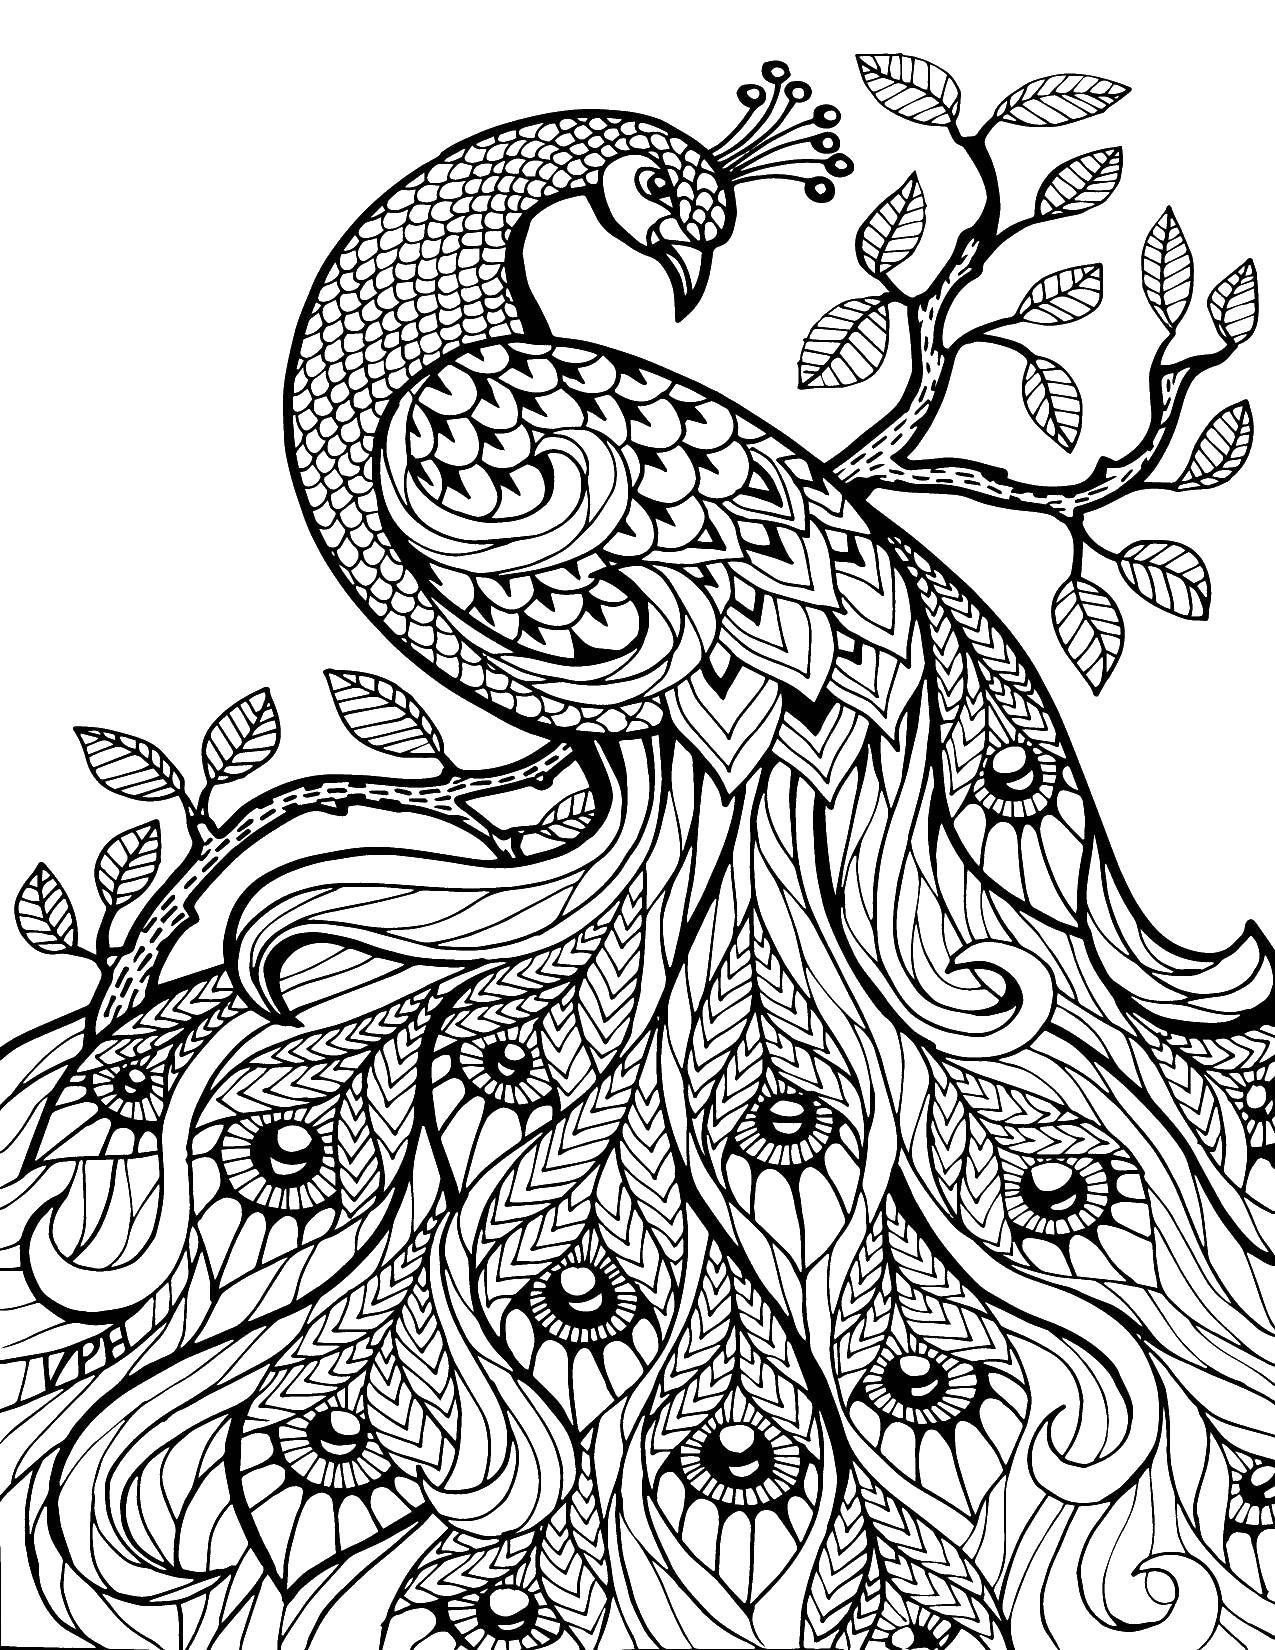 Название: Раскраска Павлин на дереве. Категория: павлин. Теги: павлин, хвост, узоры, антистресс.